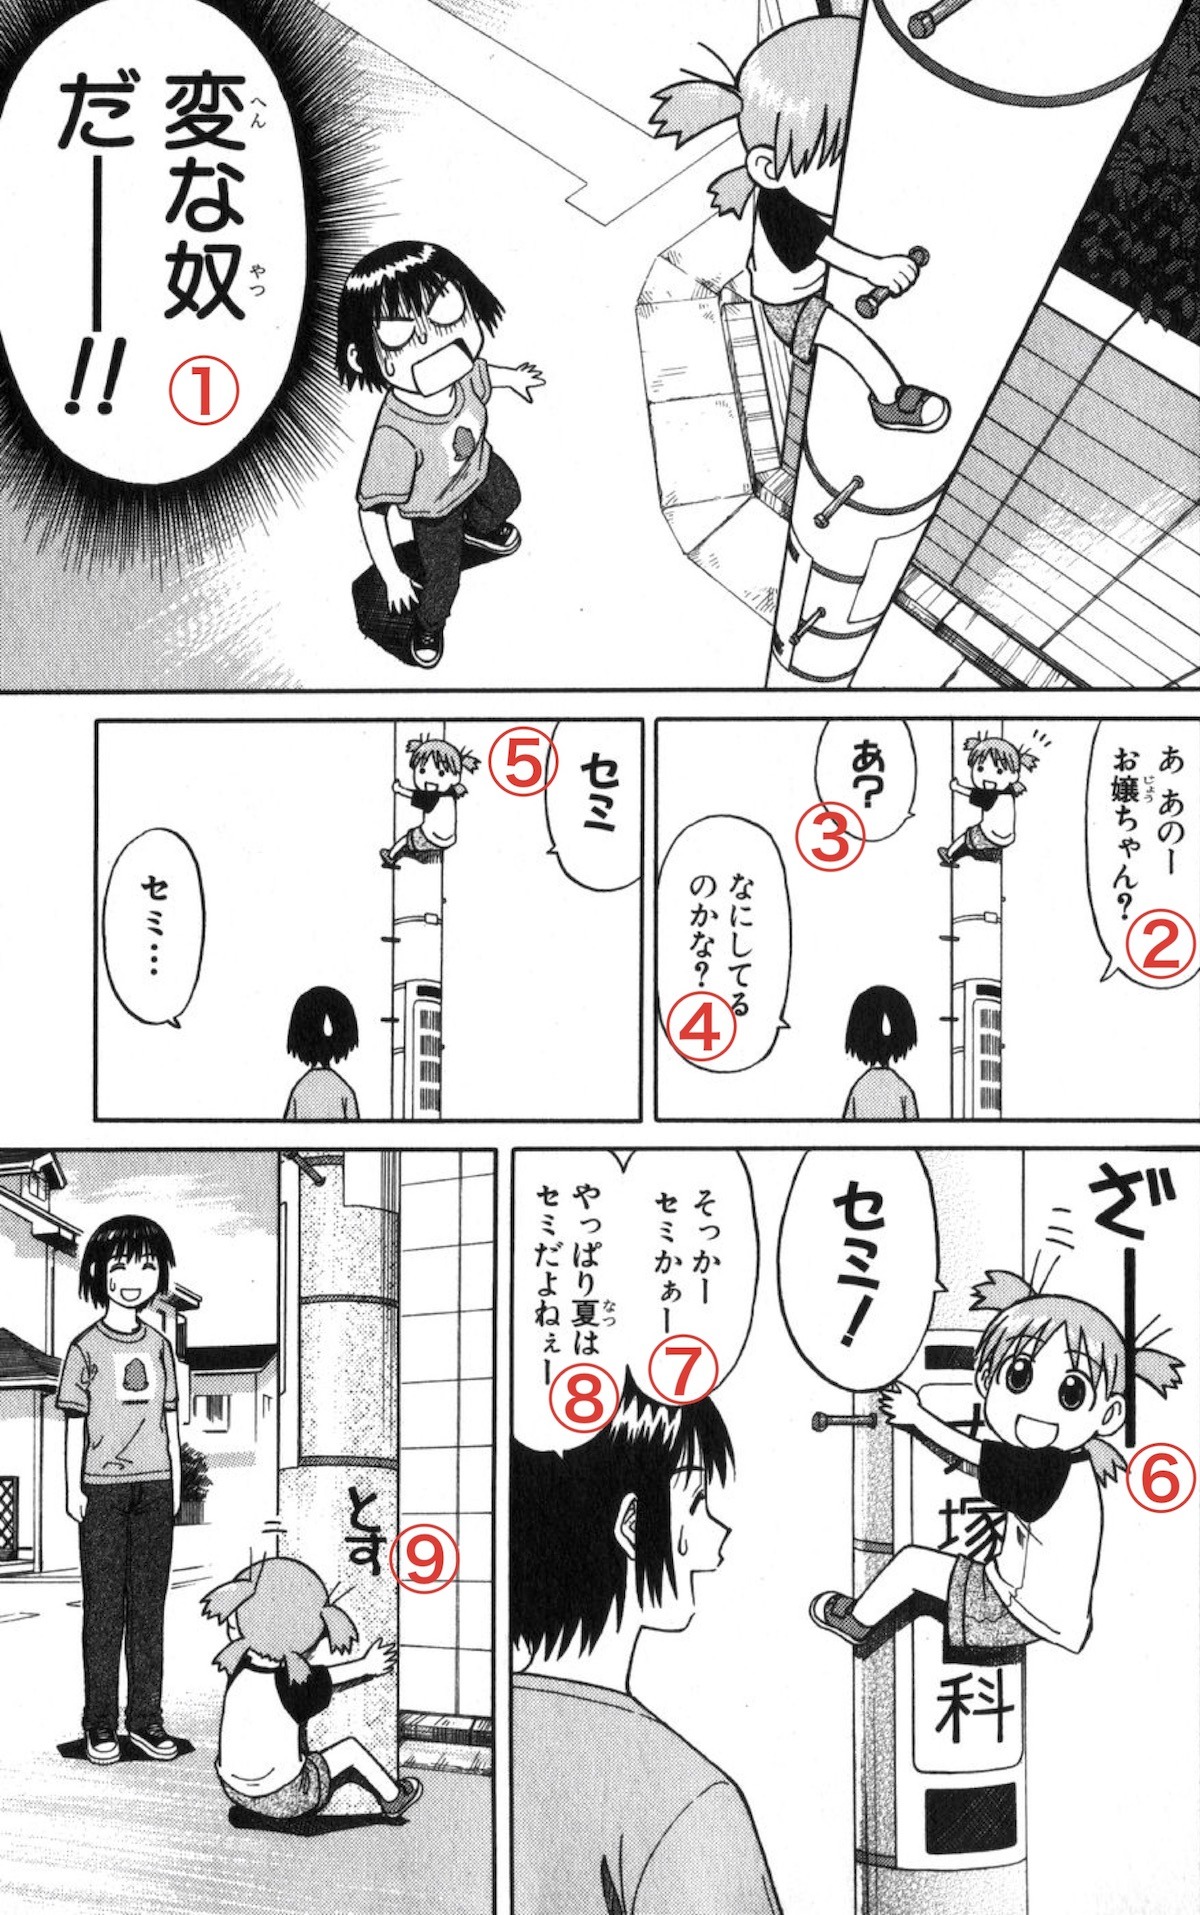 Analysis Of Manga Yotsubato 1 Easy Peasy Japanesey